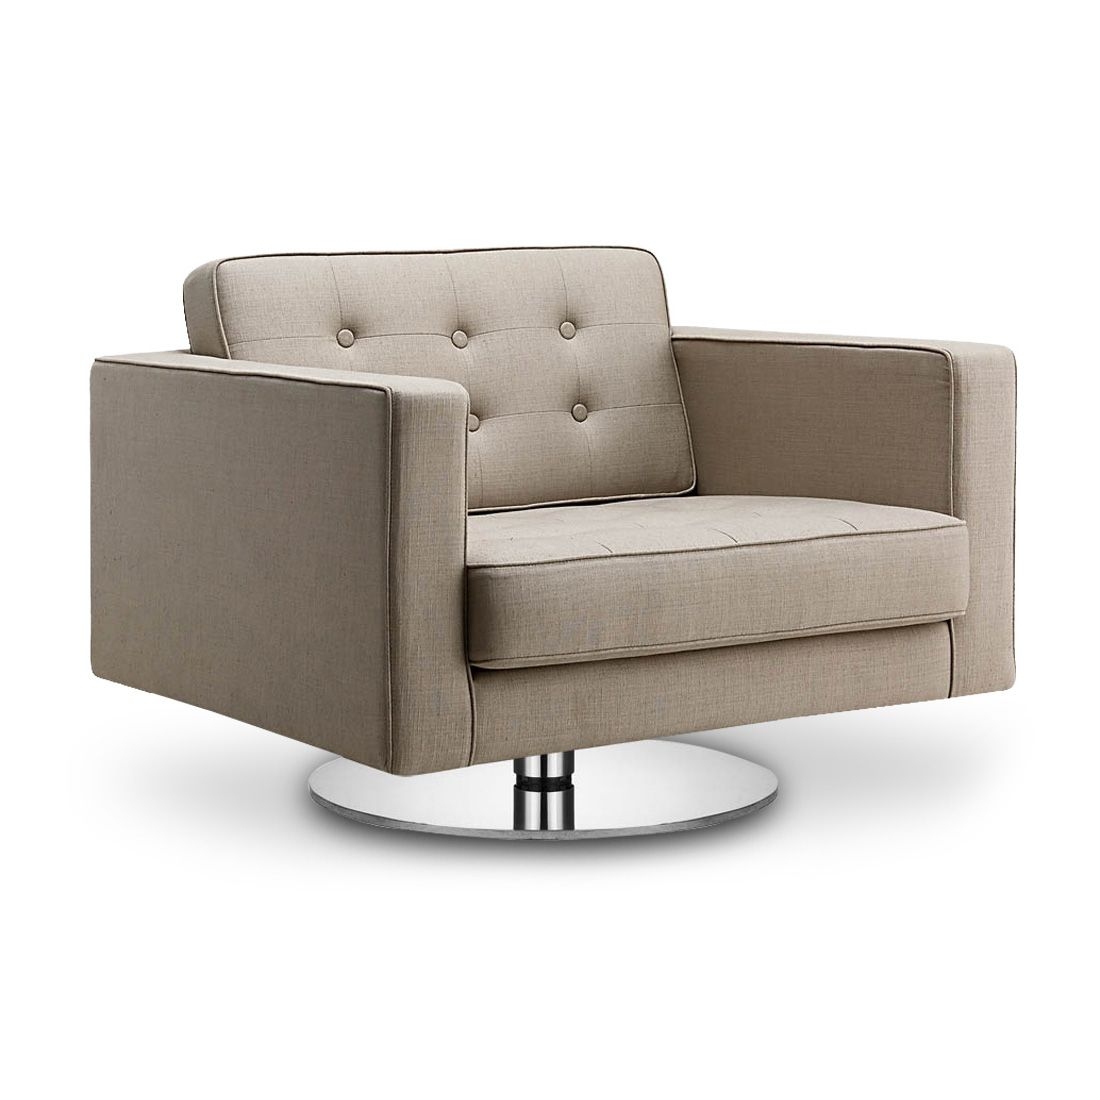 Modern swivel chairs for living room